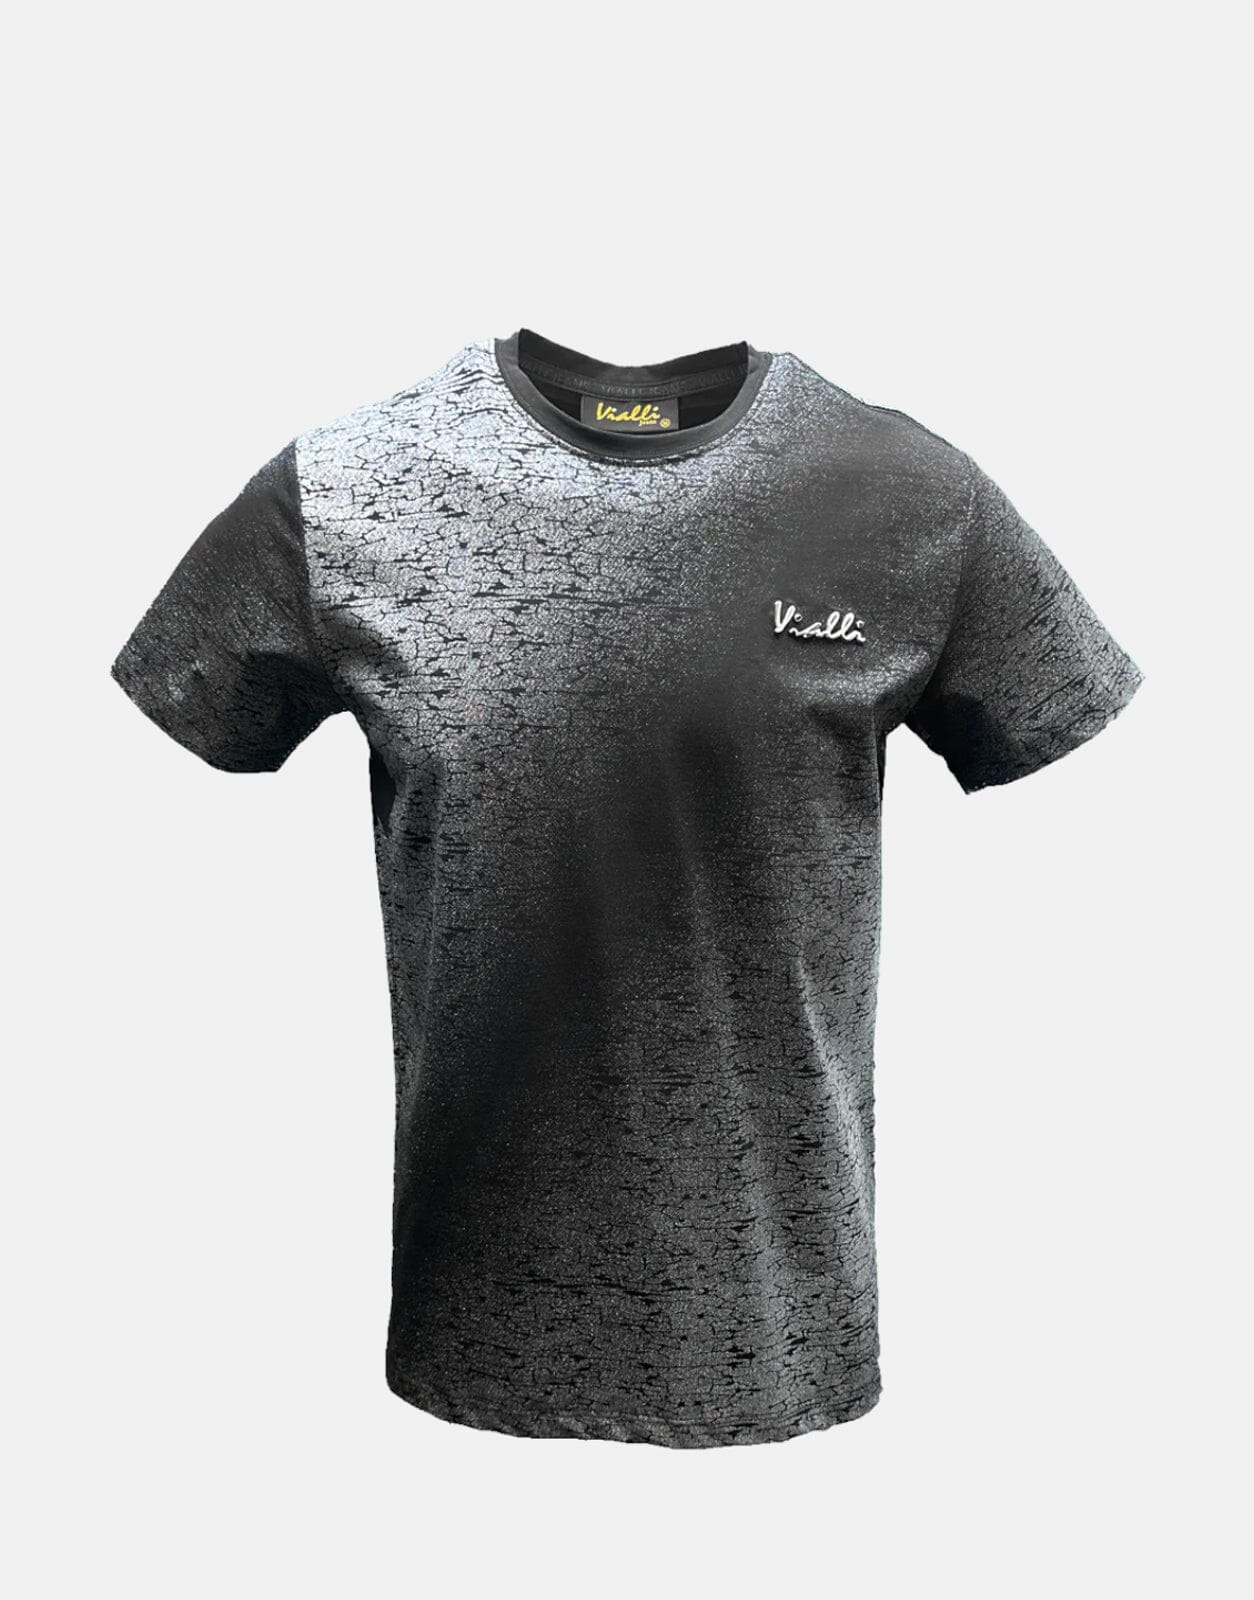 Vialli Prank Black T-Shirt - Subwear